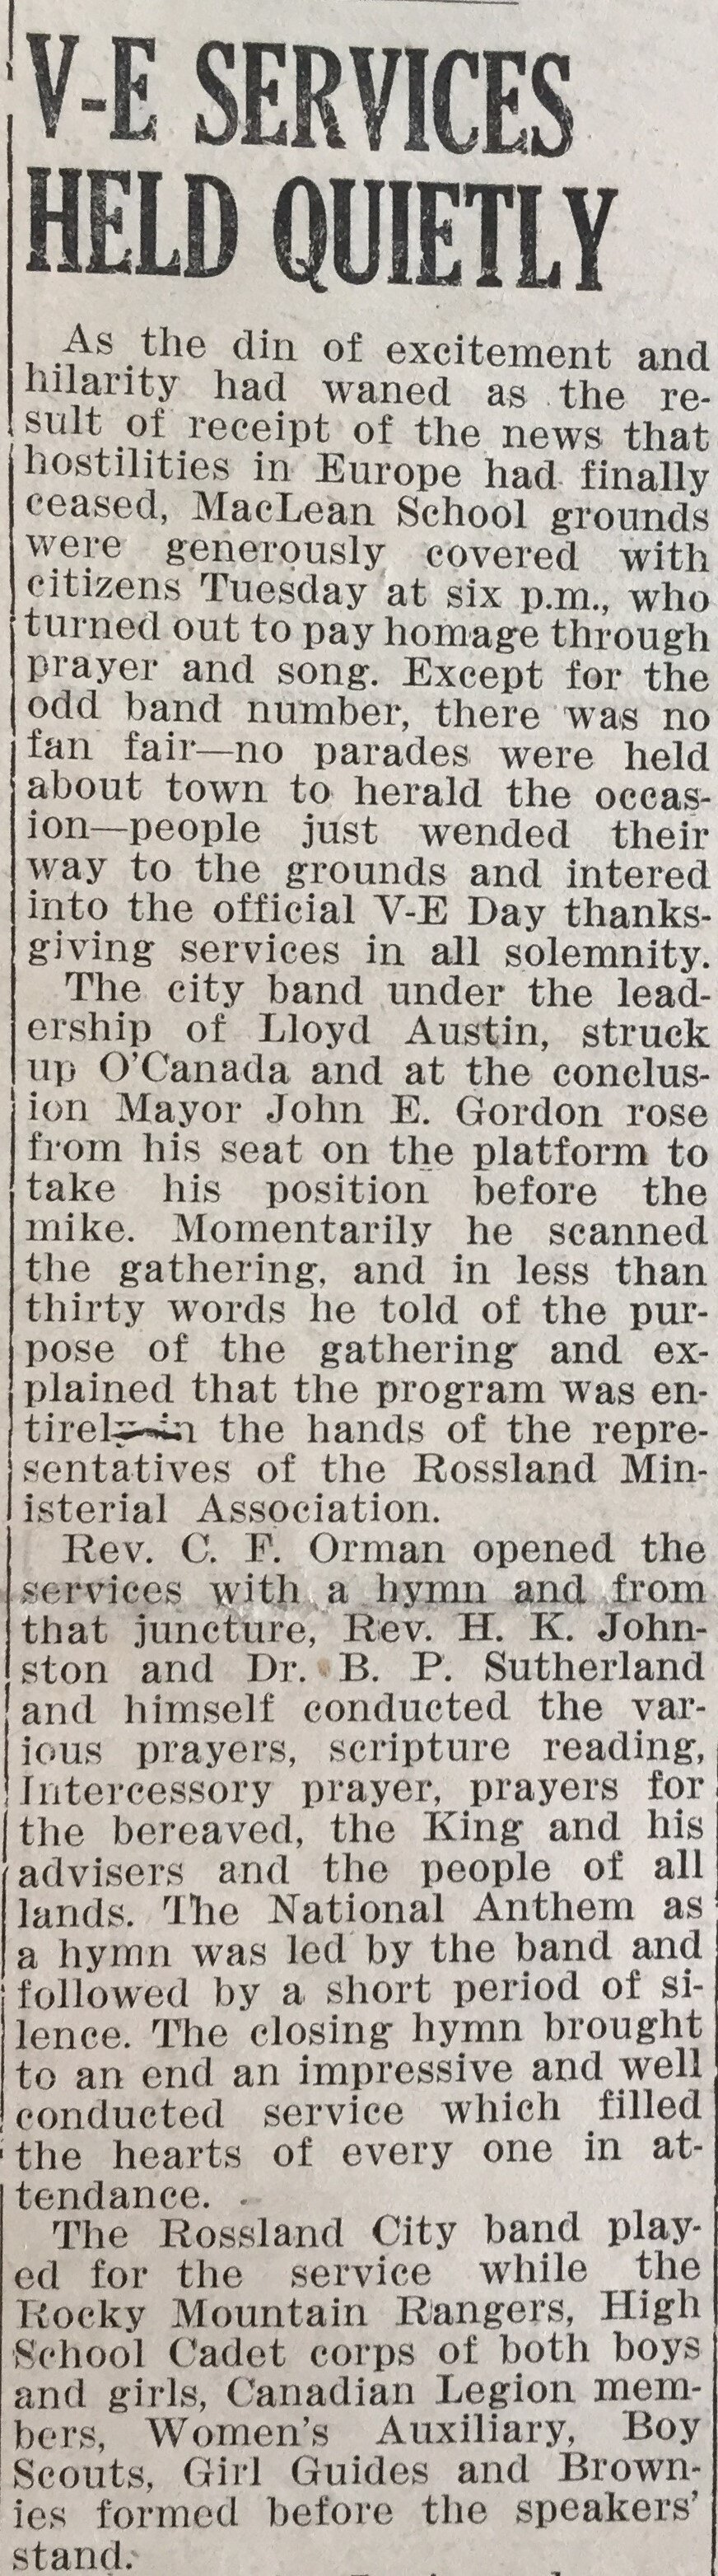 V-E Service (1) - Rossland Miner May 10, 1945 pg 1.JPG